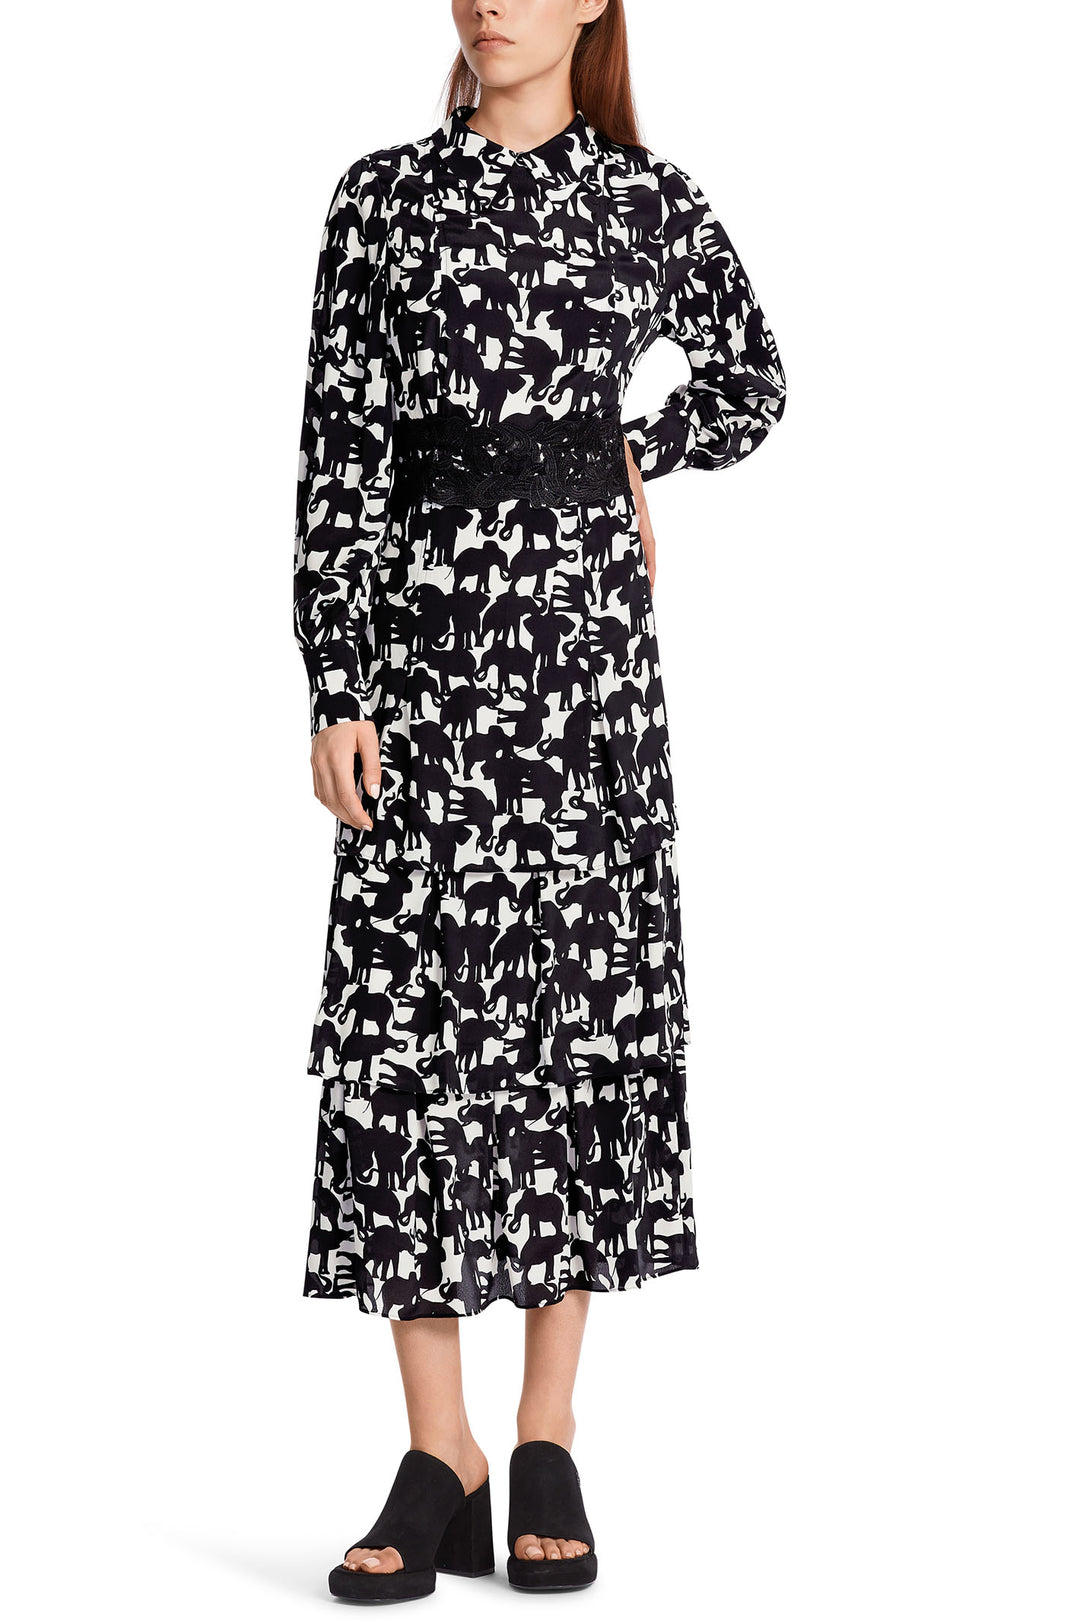 Marc Cain Collection WC 21.18 W12 910 Black White Elephant Print Dress - Olivia Grace Fashion